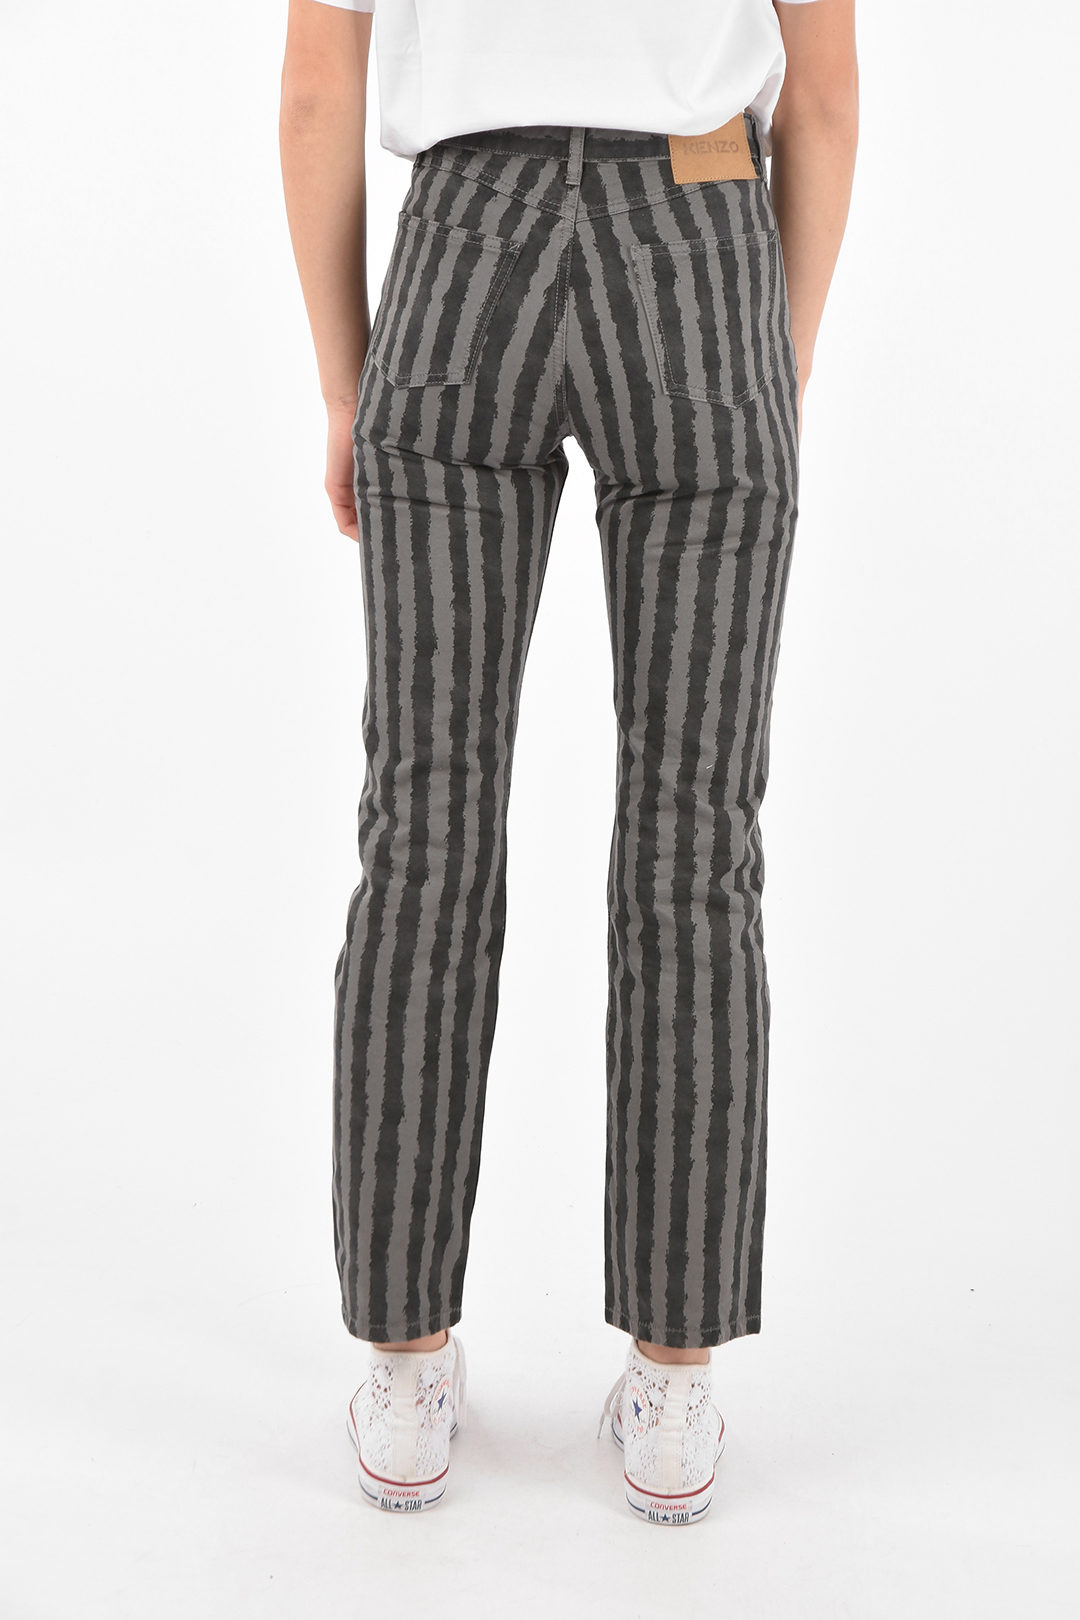 https://data.glamood.com/imgprodotto/vertical-striped-kansai-yamamoto-cotton-pants_1139690_zoom.jpg